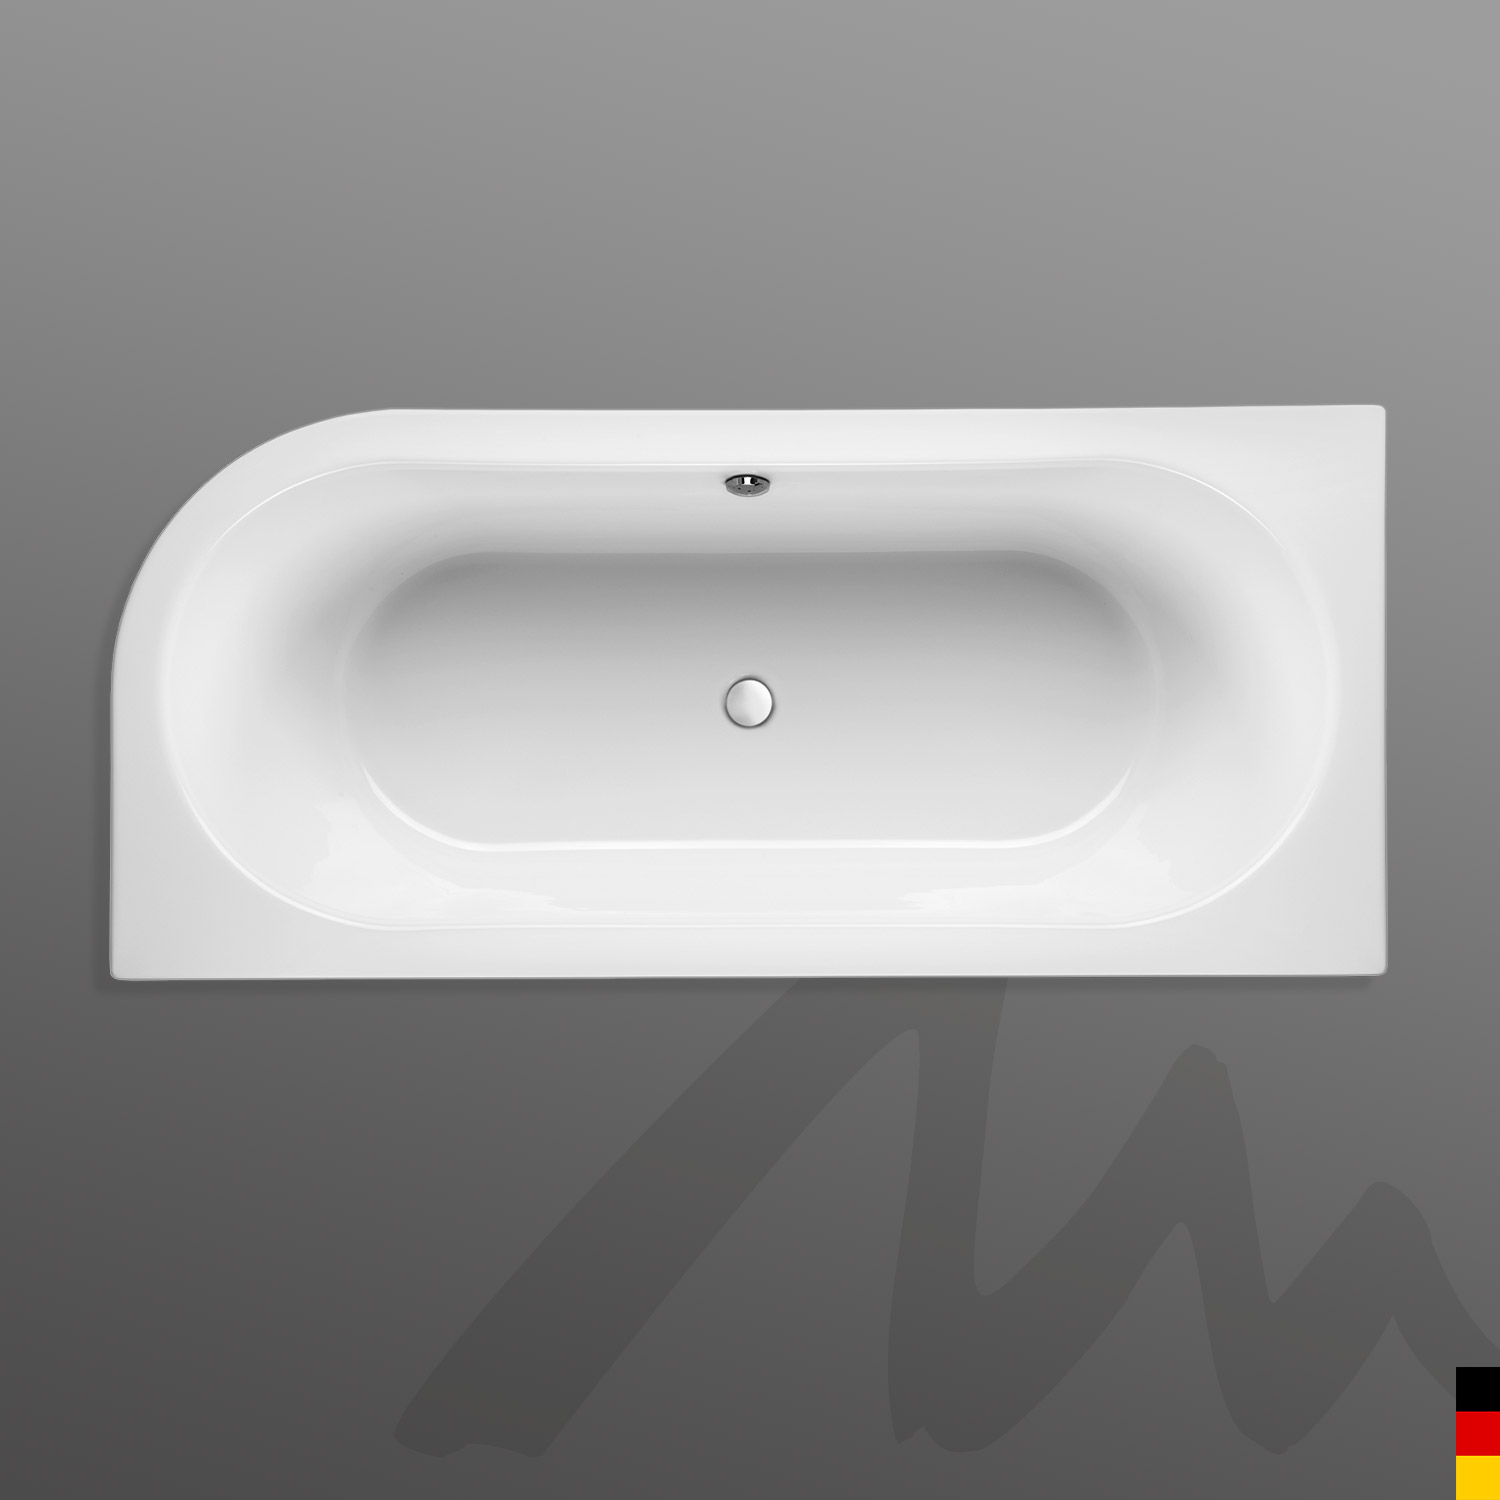 Mauersberger Badewanne Oval Primo 1 - 180/80 duo Ausführung links  180x80x45  Farbe:rein-weiß